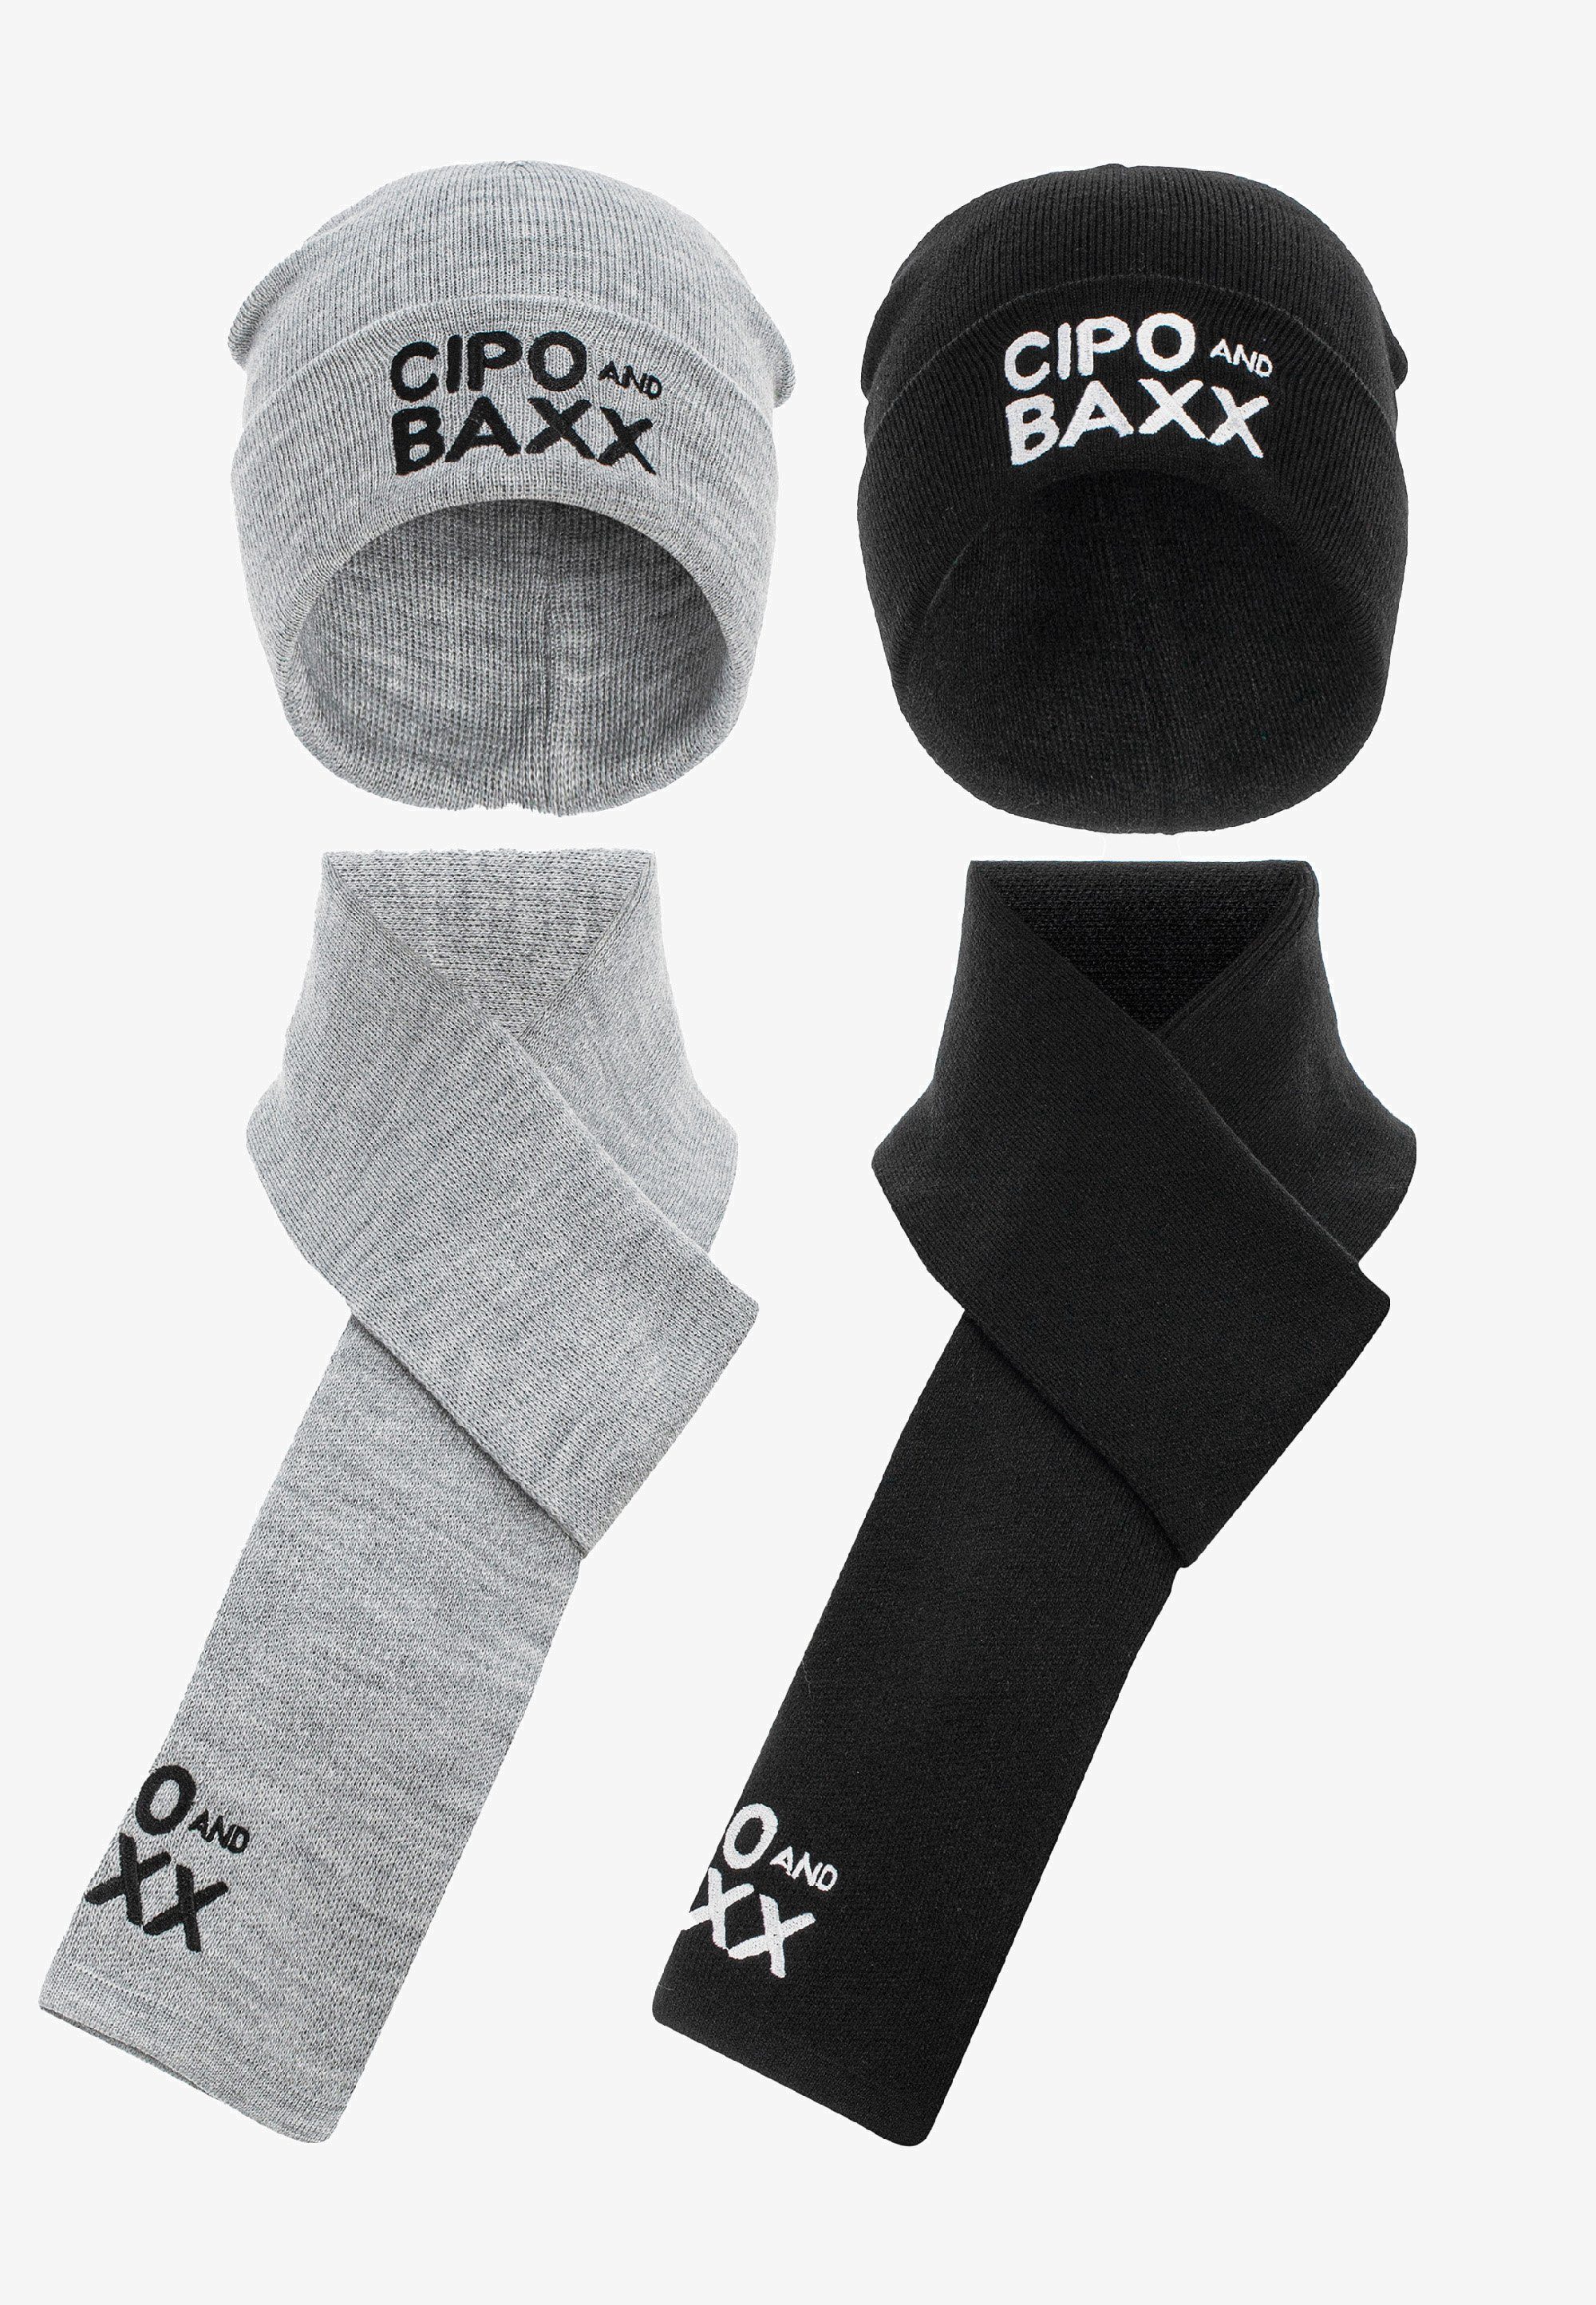 bestickt & Cipo Markenschriftzug Strickmütze mit Baxx